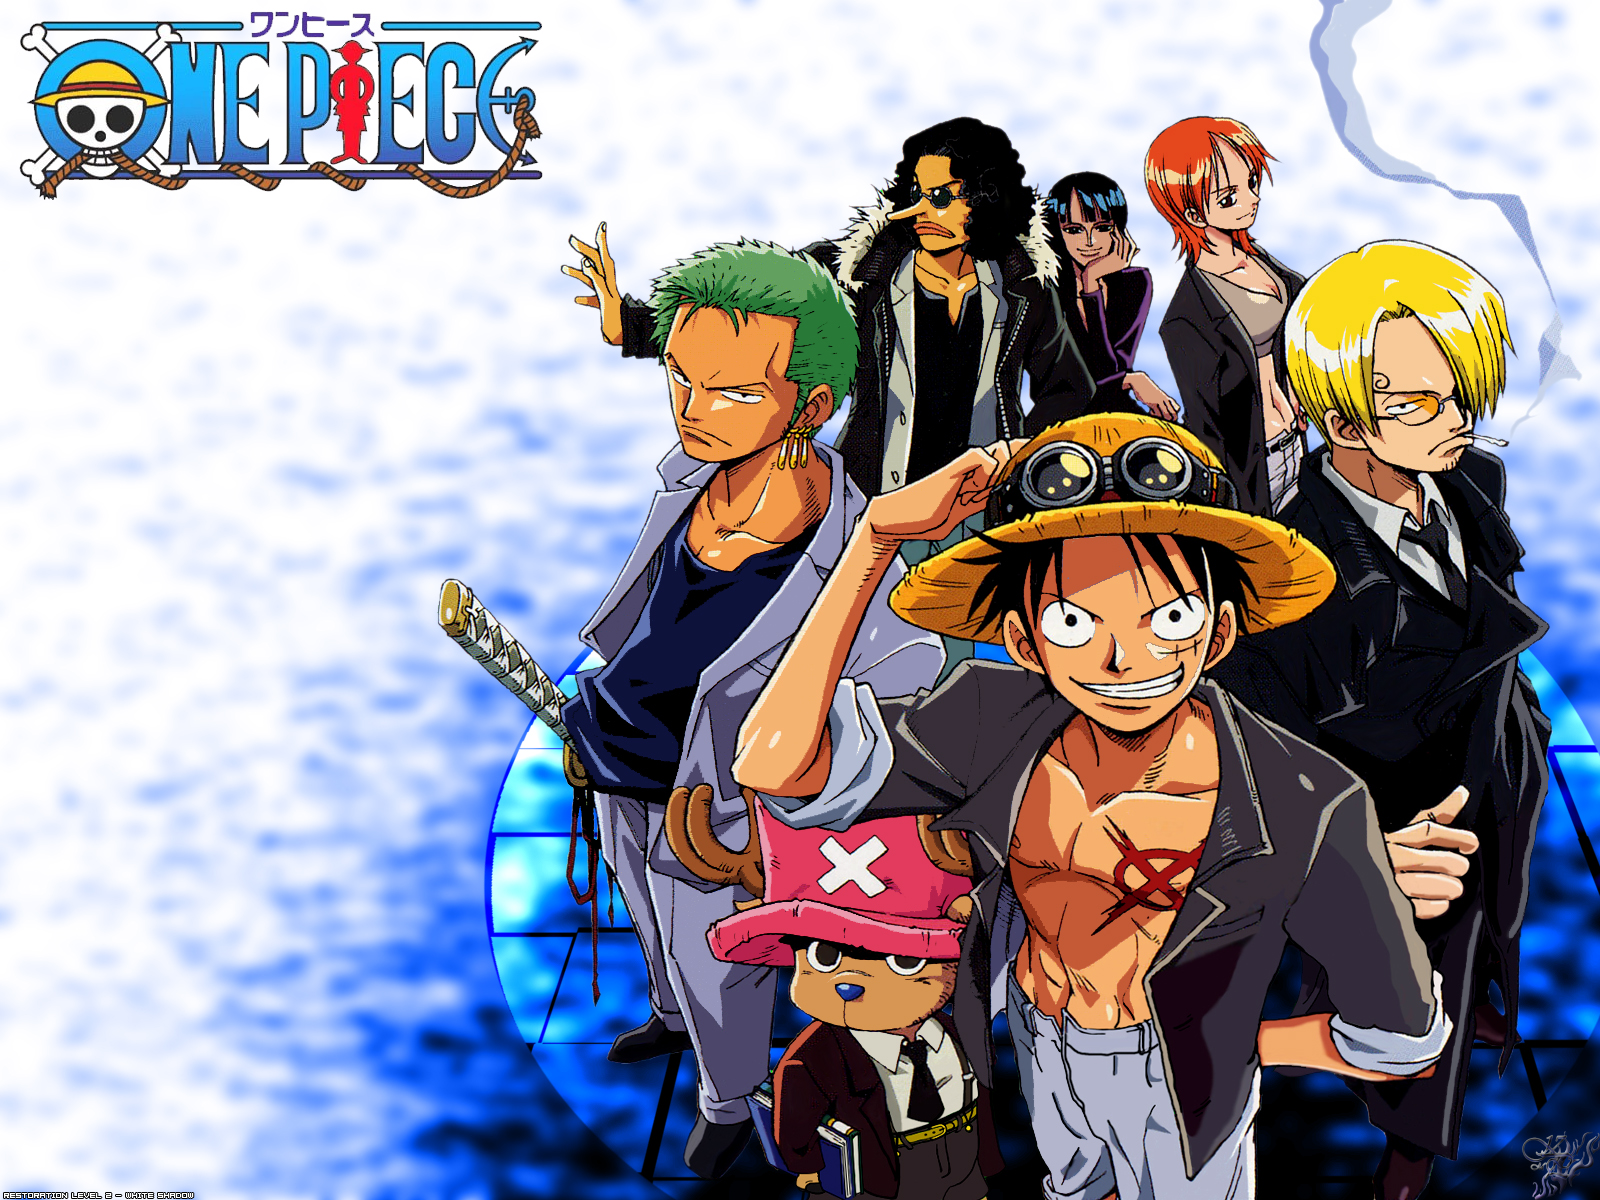 Fond d'ecran One Piece Serie